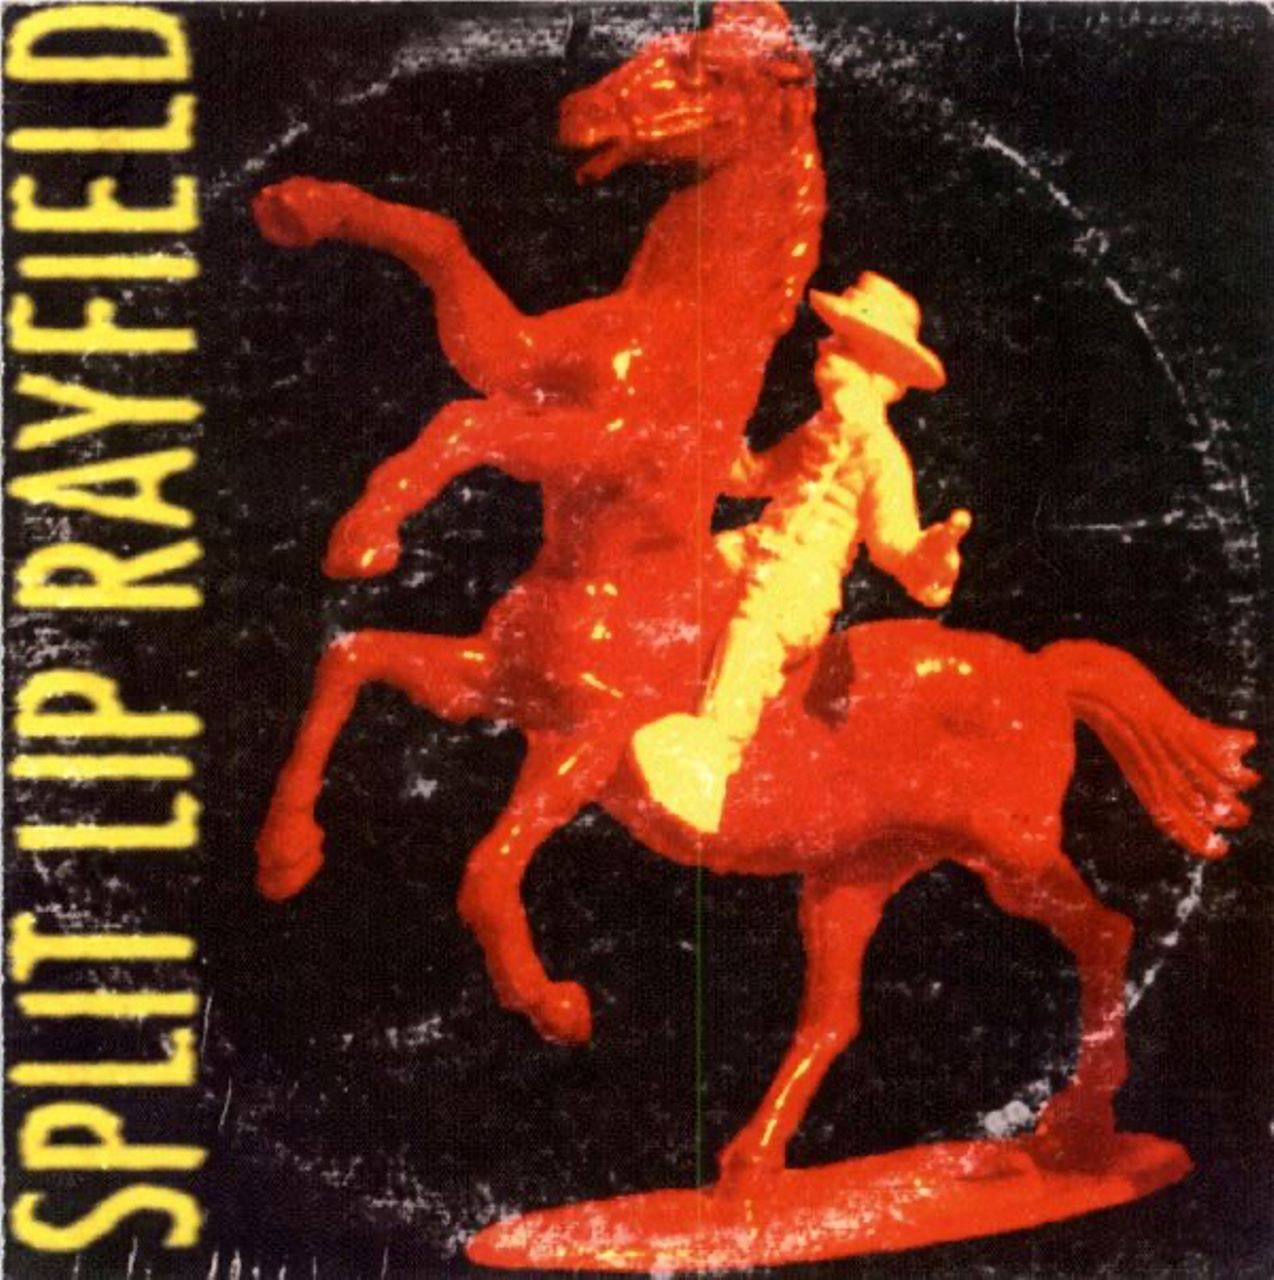 Split Lip Rayfield - Split Lip Rayfield cover album